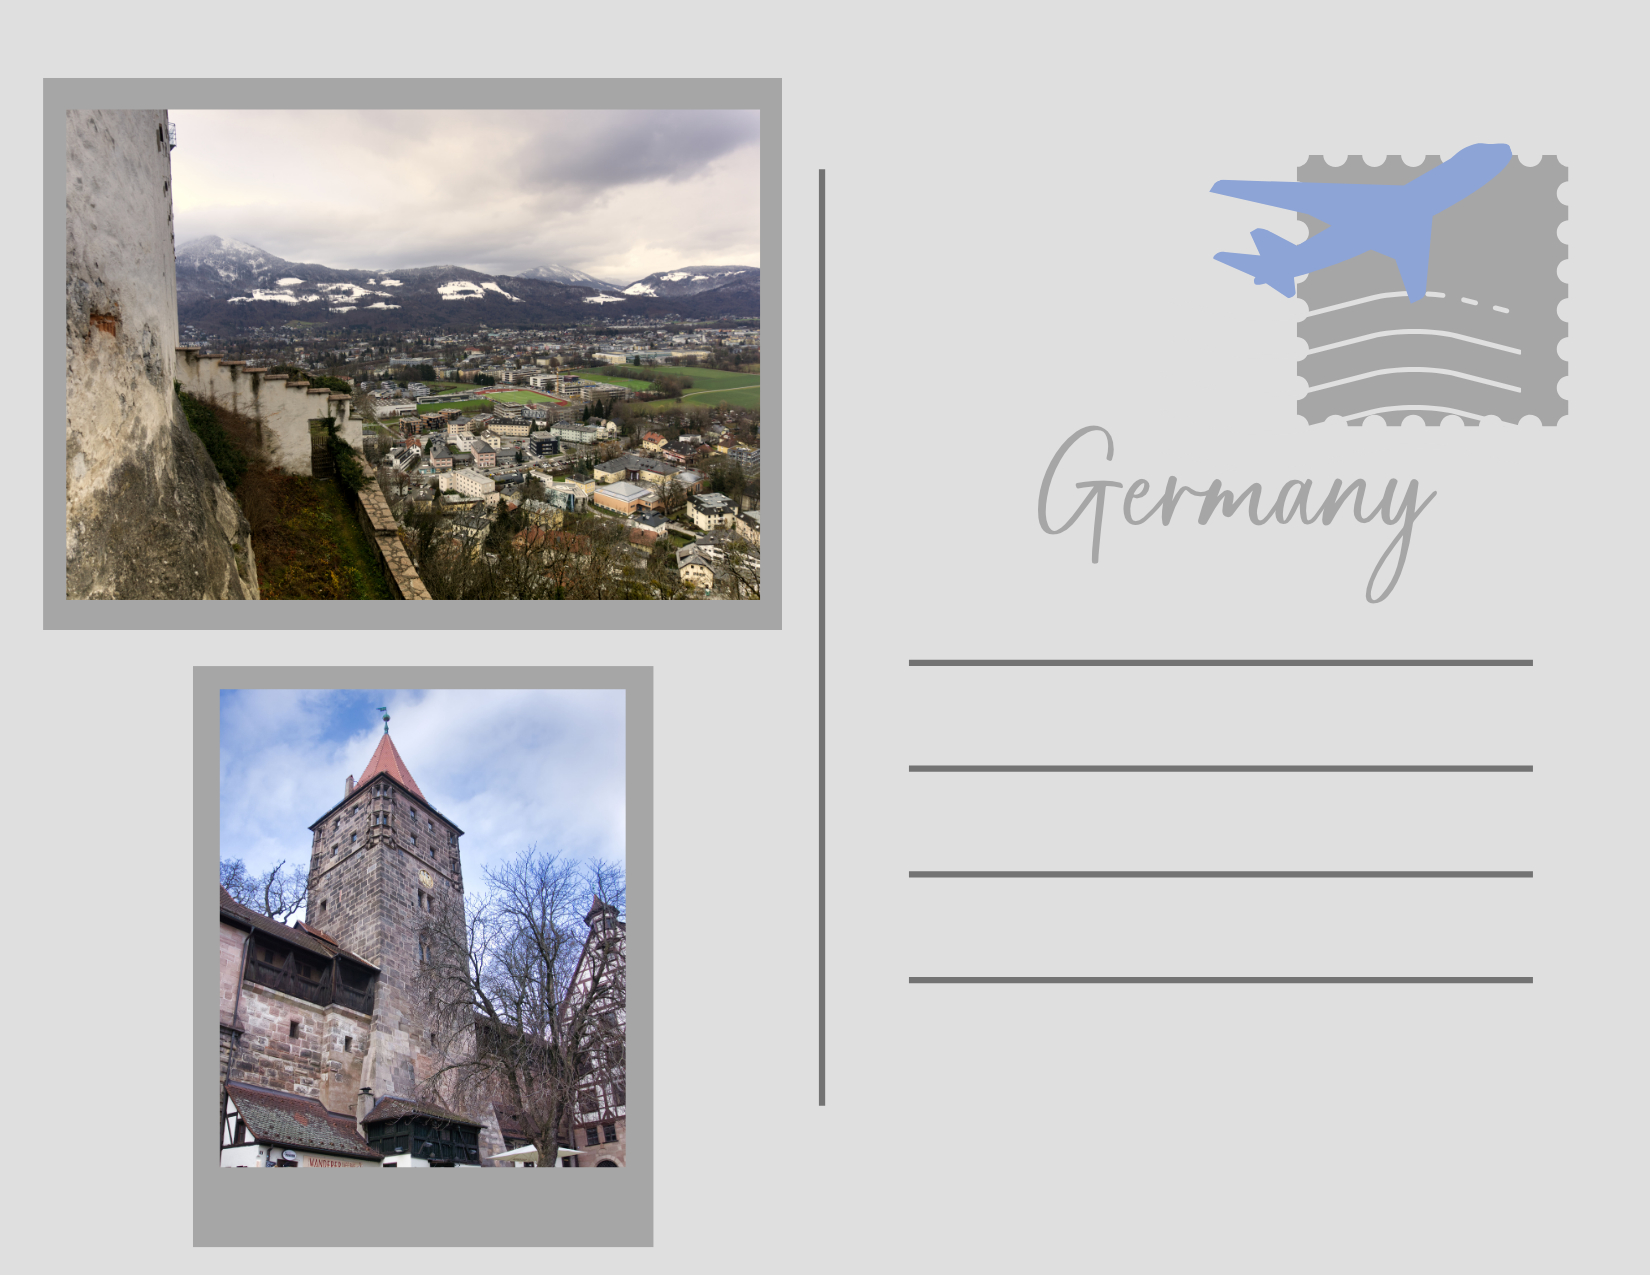 postcard for germany destination